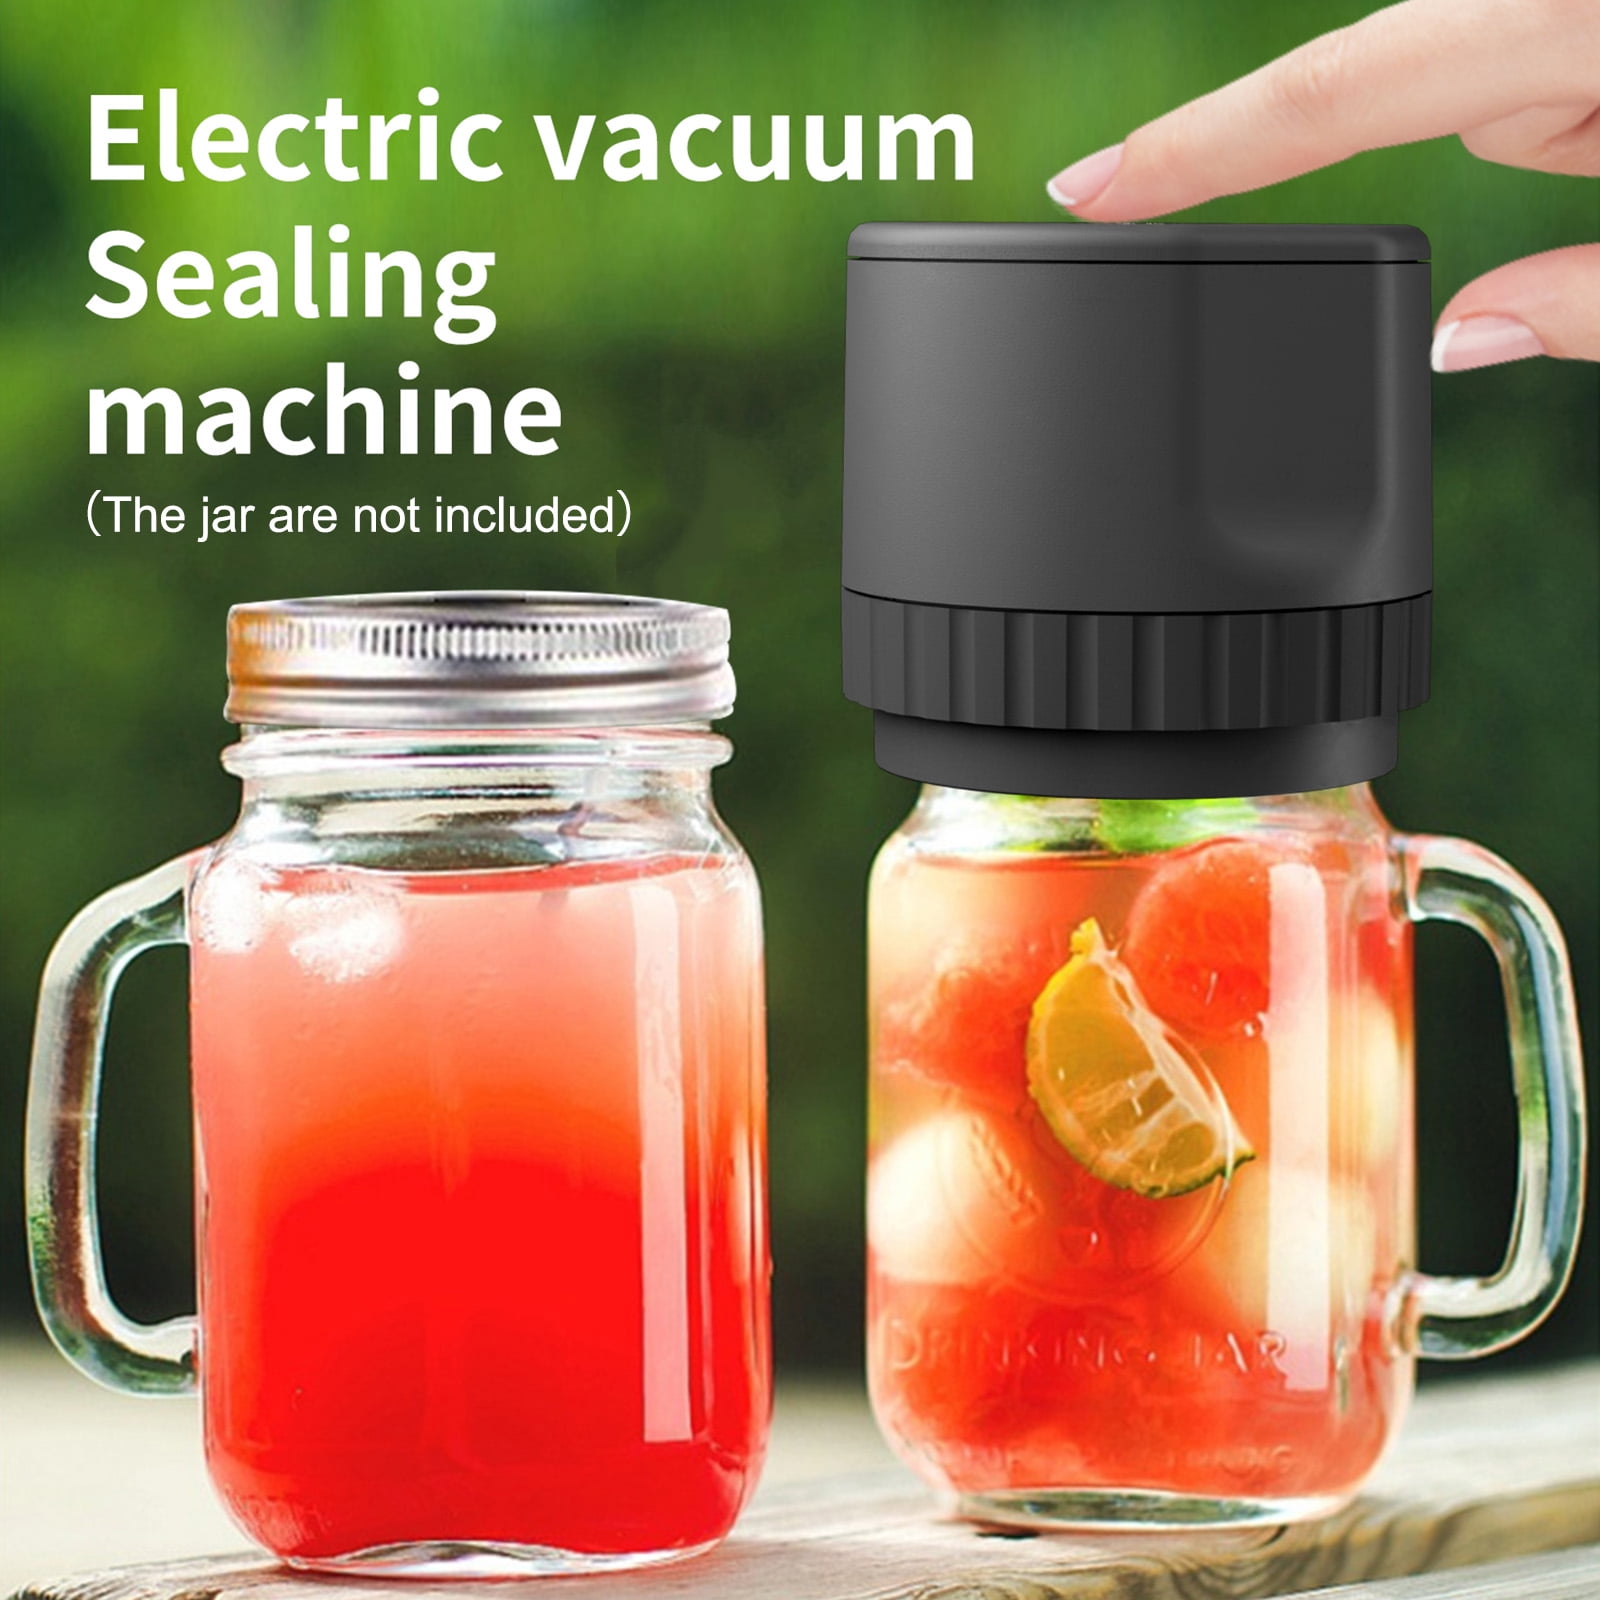 Electric Mason Jar Vacuum Sealer Kit for Wide and Regular Mouth, HUIJUTCHEN  Cordless Mason Jar Sealer Vacuum Kit with LED Display for Power, Work